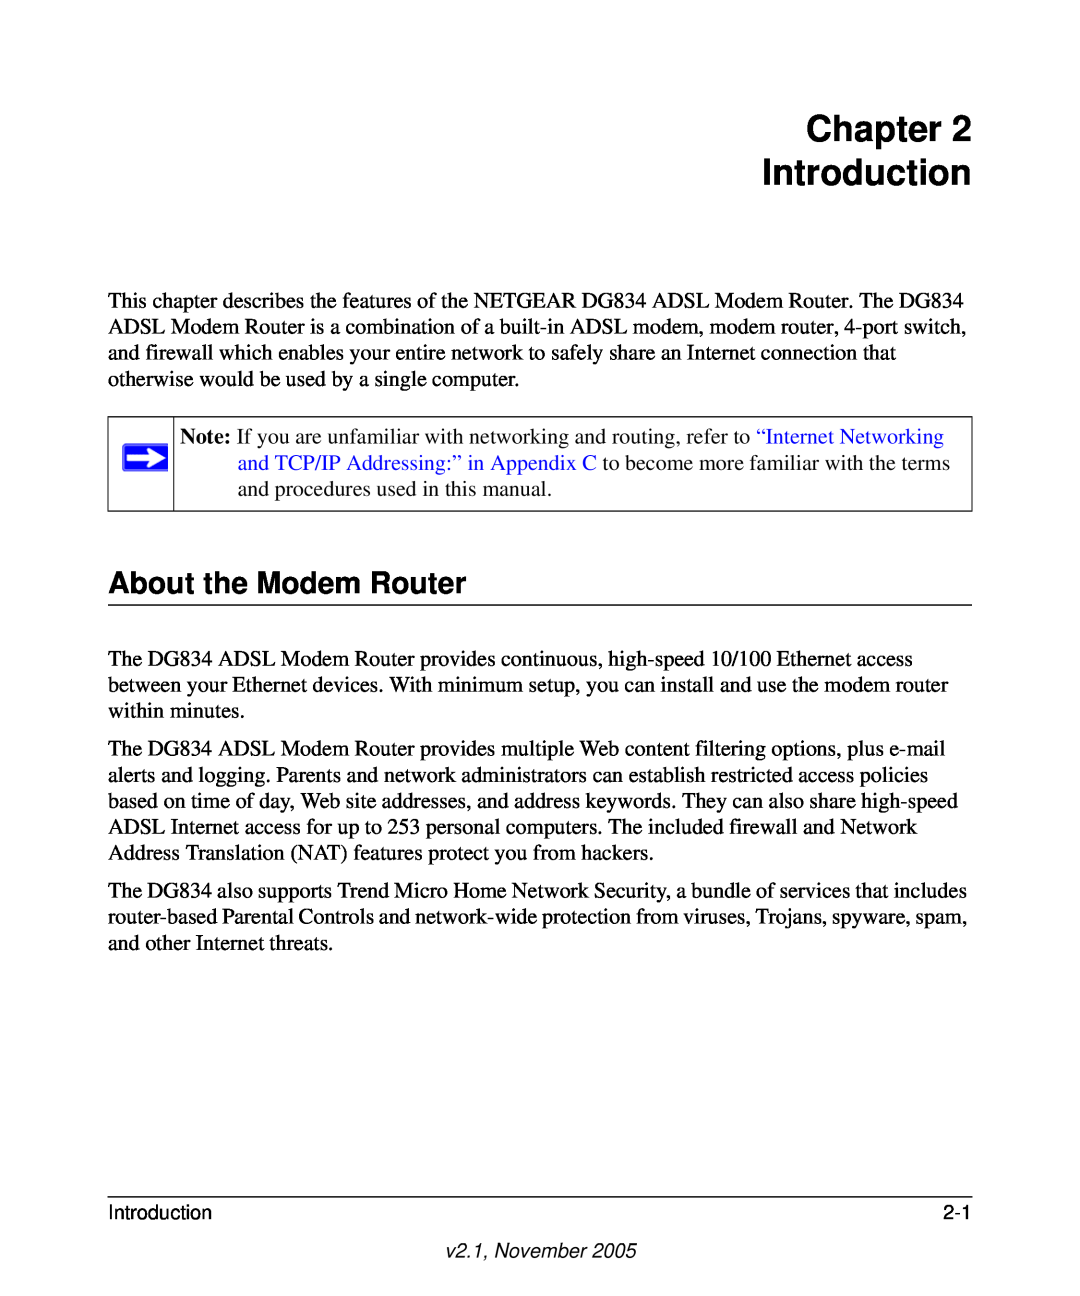 NETGEAR manual Reference Manual for the ADSL Modem Router DG834, NETGEAR, Inc 